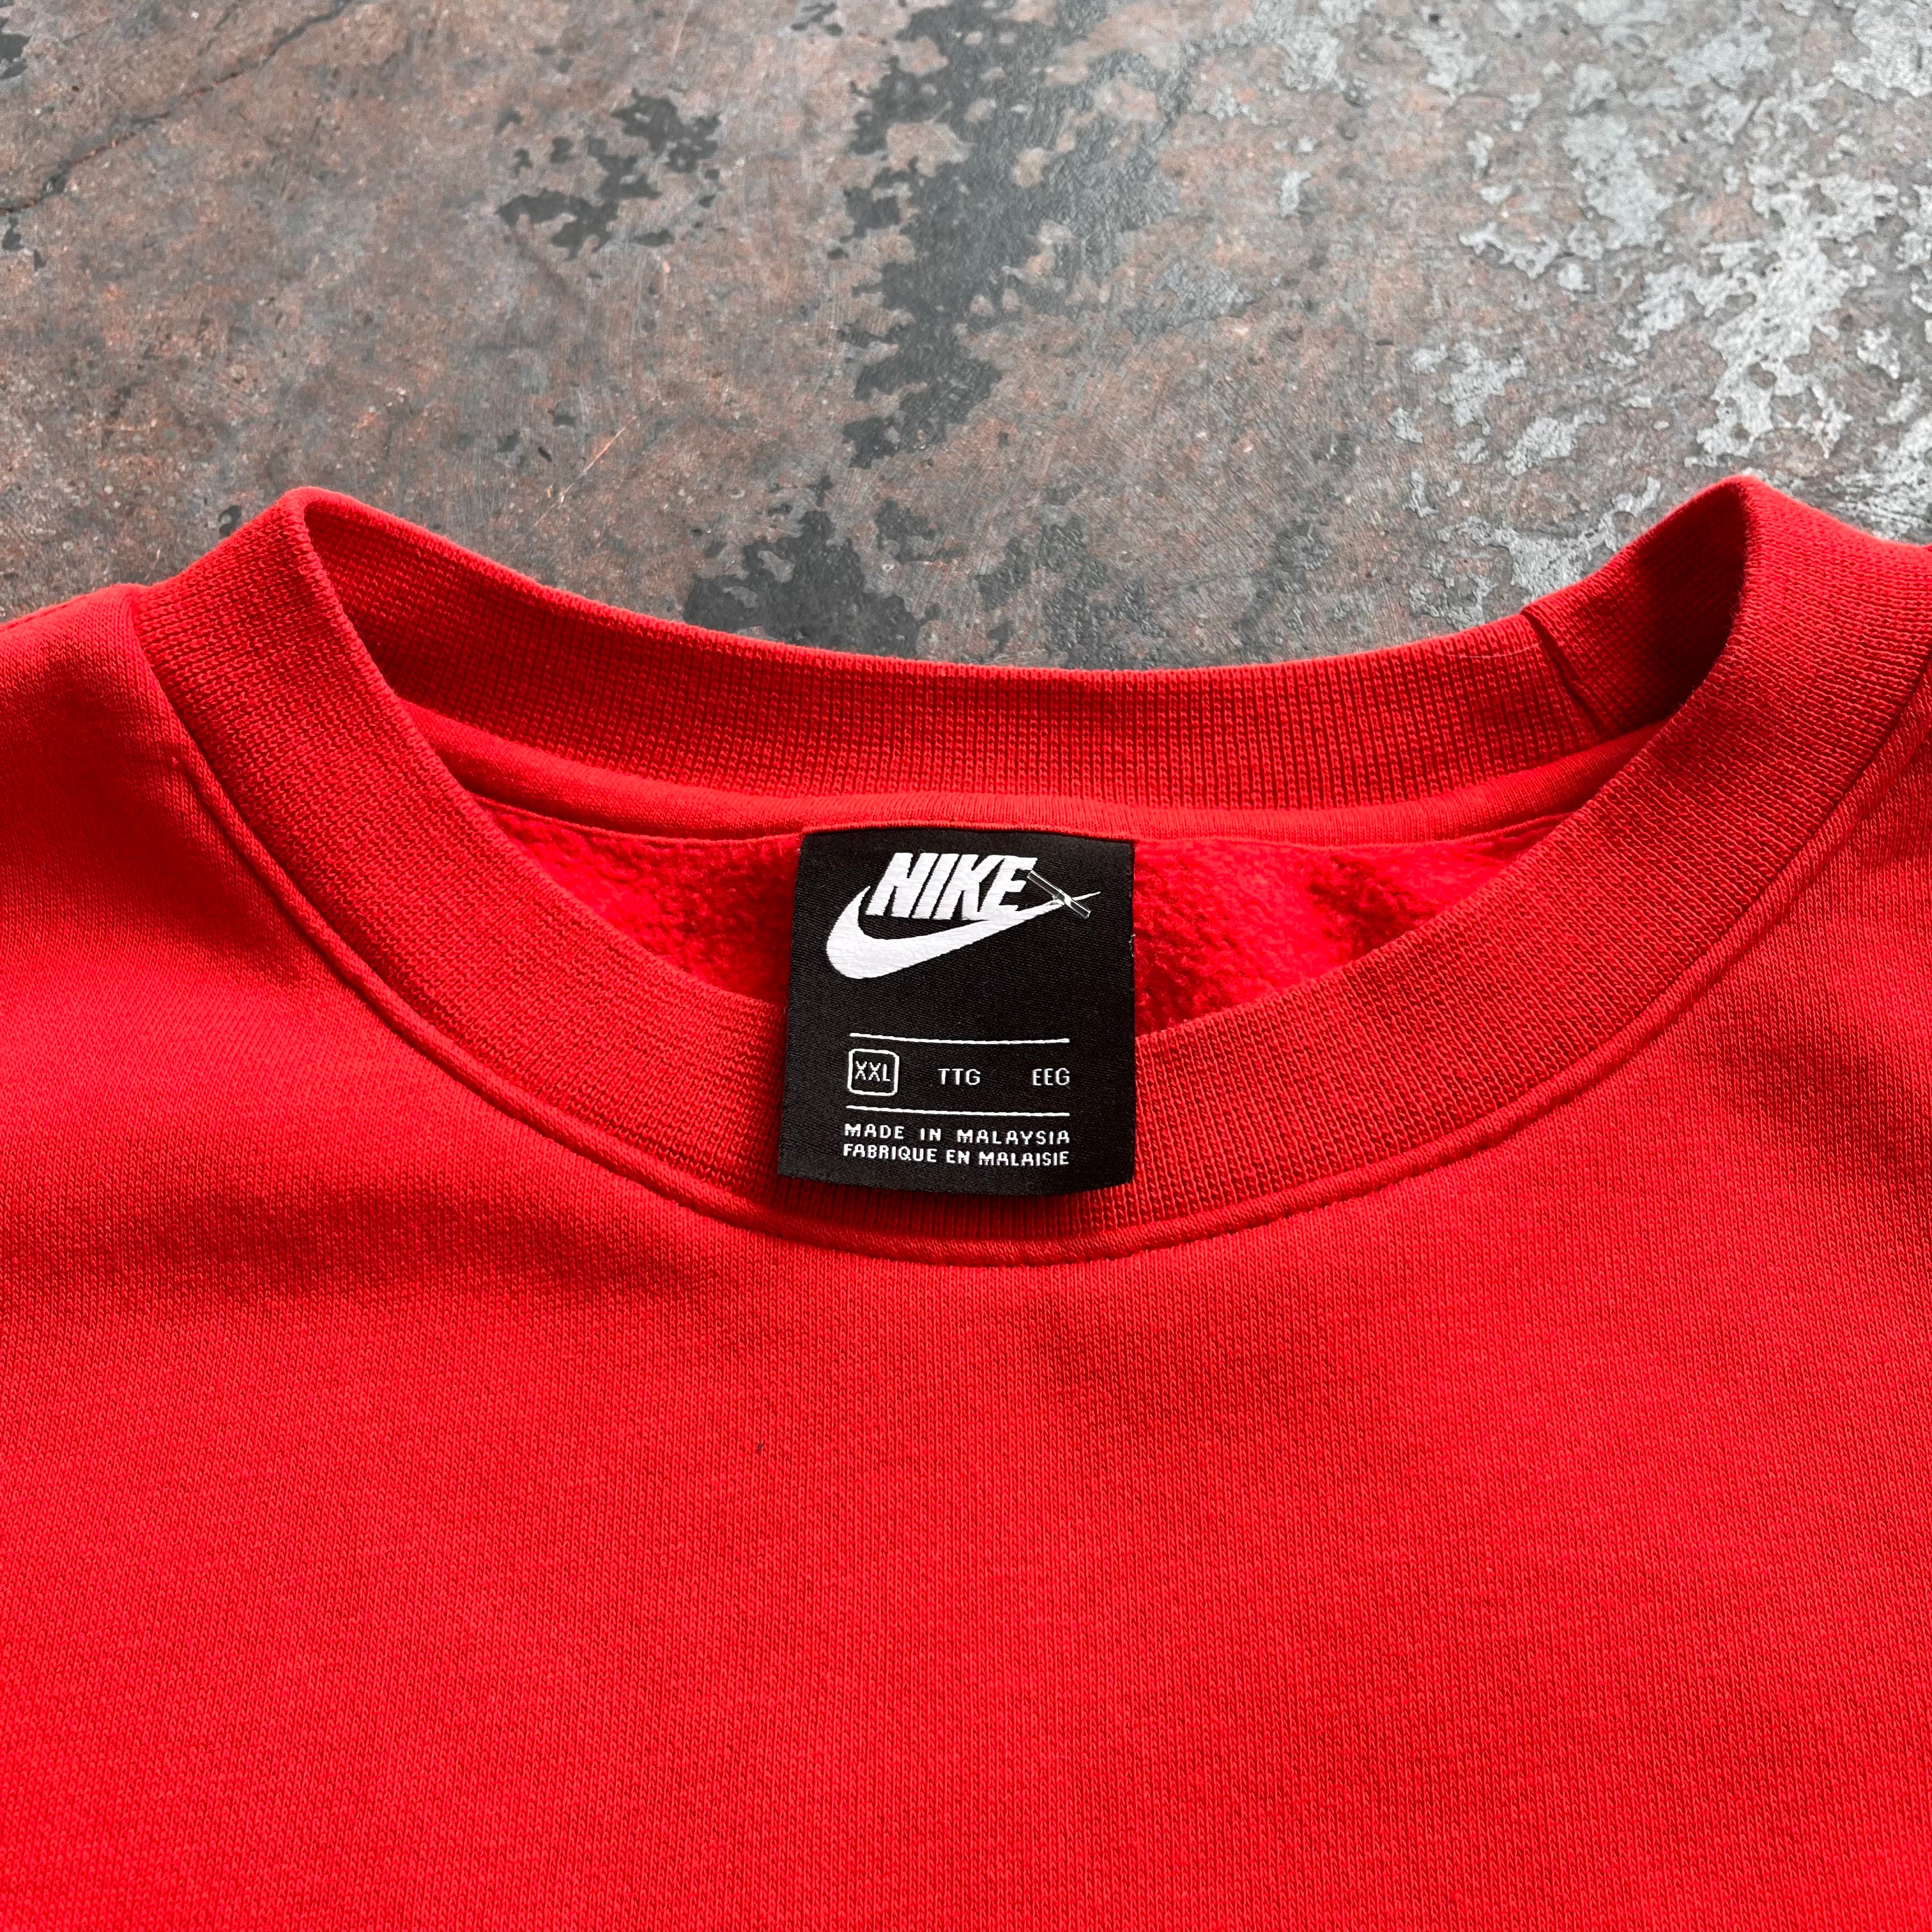 Red Nike Sweatshirt